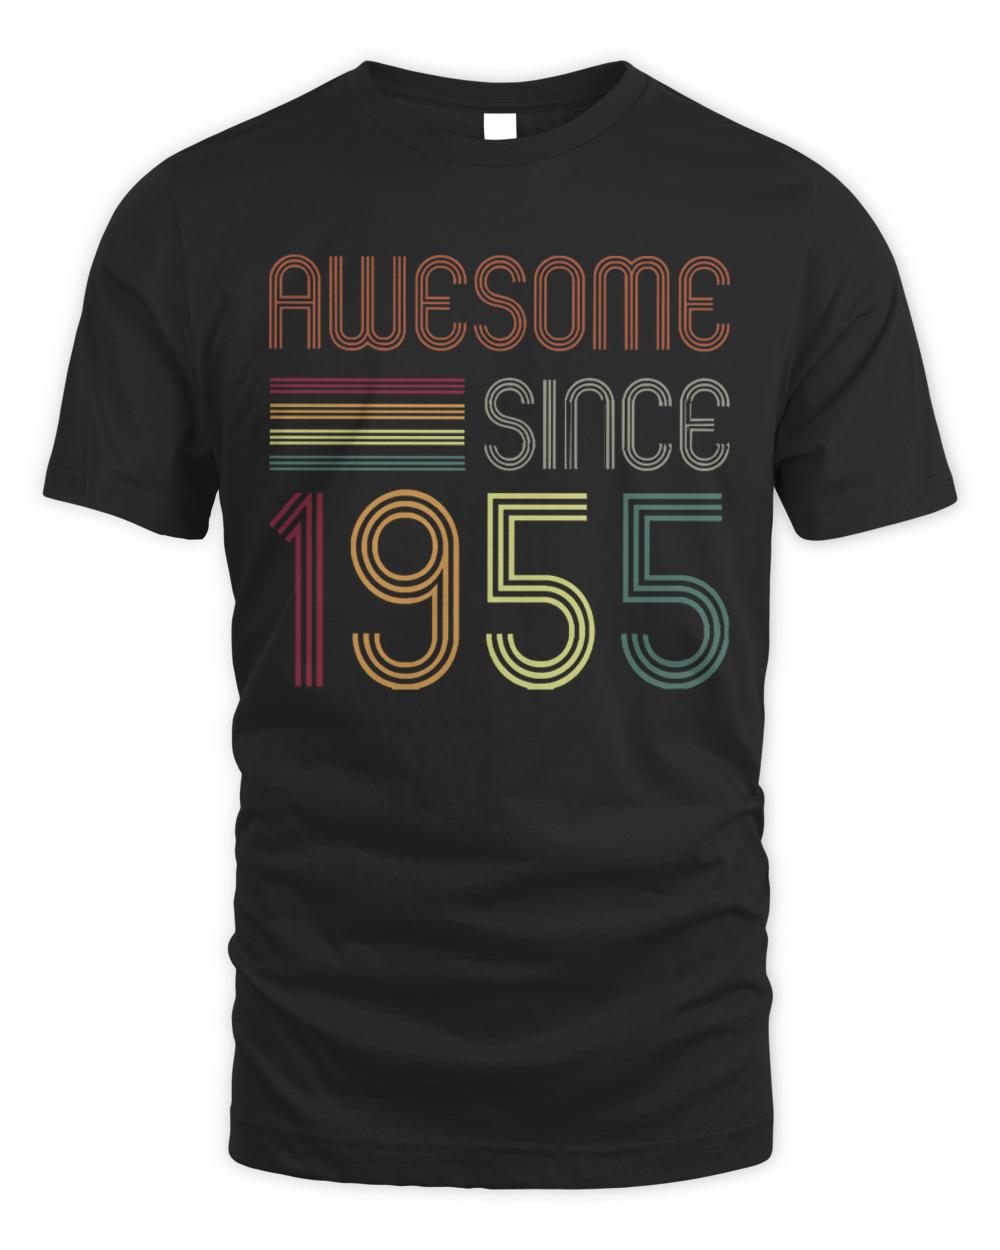 Awesome Since 1955 T-ShirtAwesome Since 1955 68th Birthday Retro T-Shirt